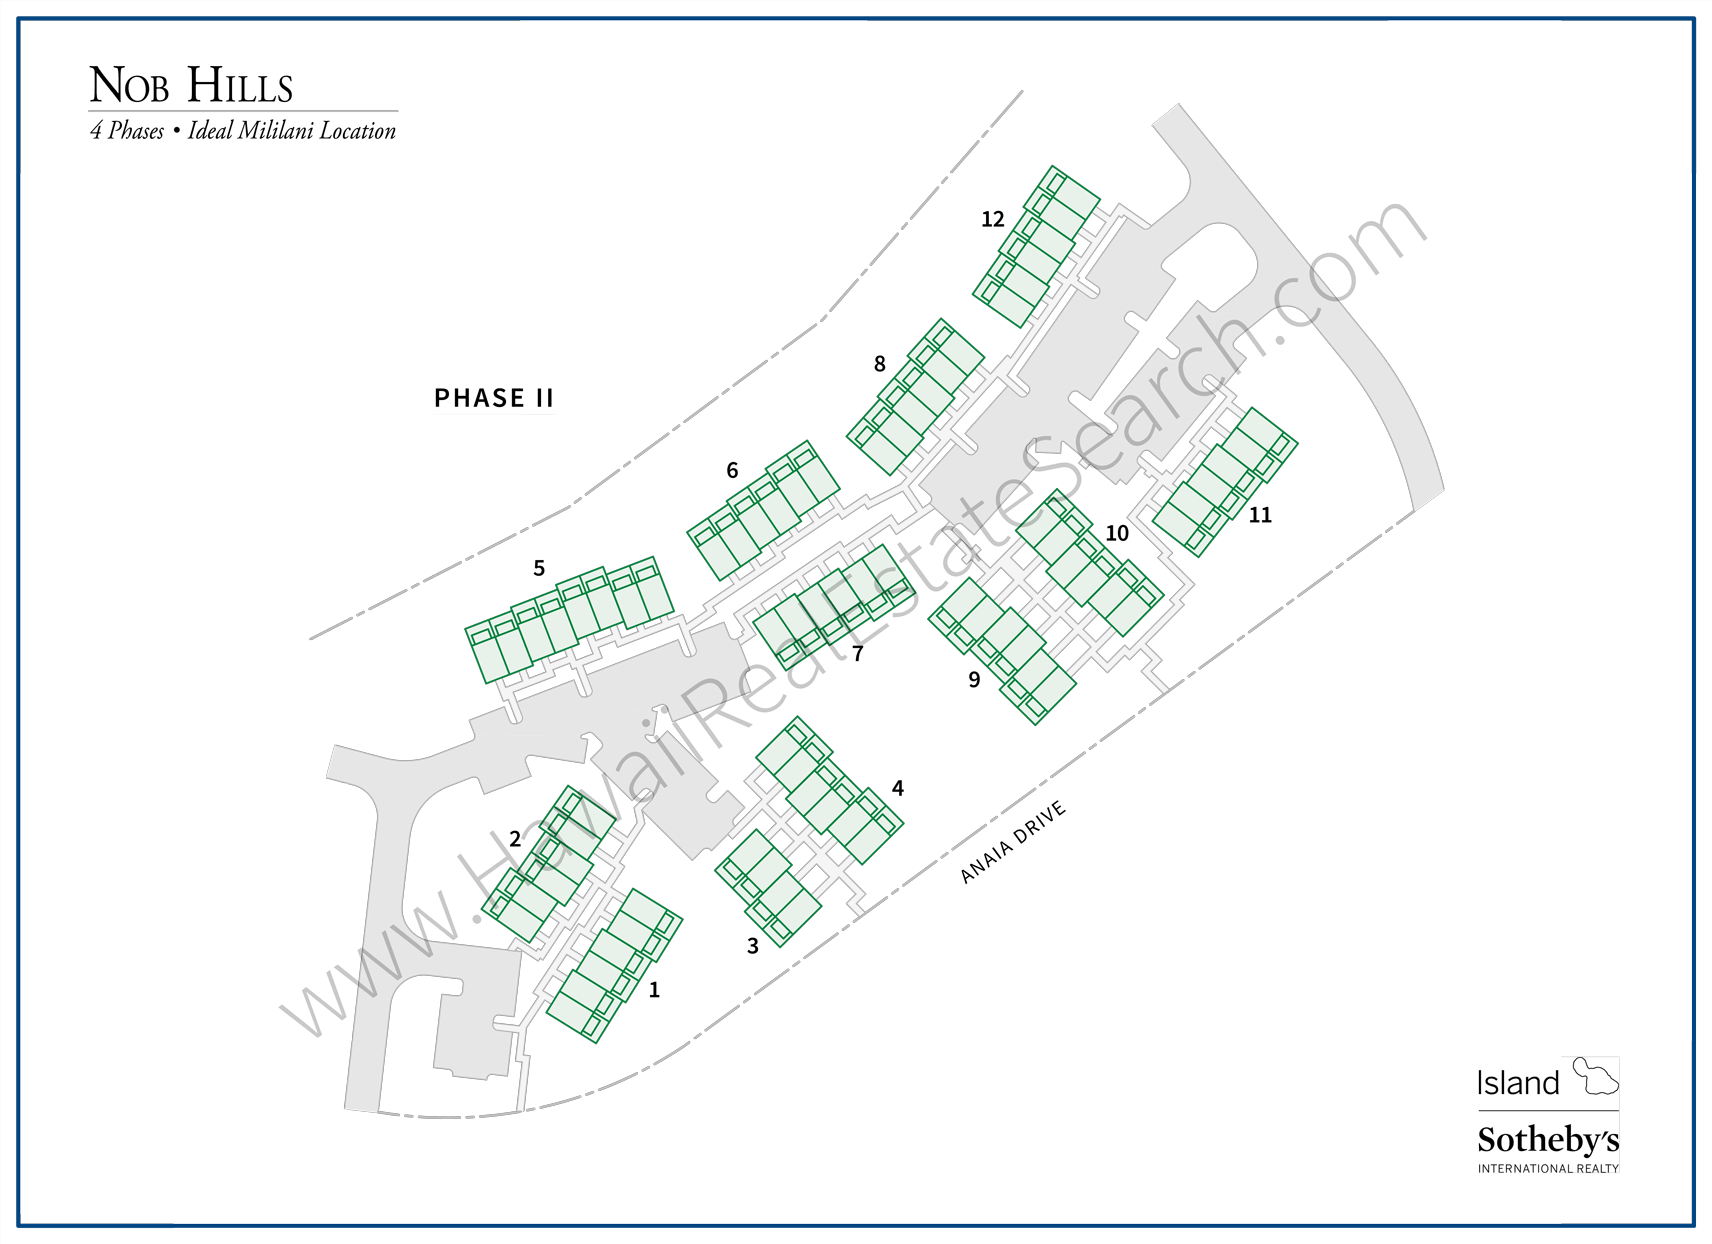 Nob Hill Map Phase I